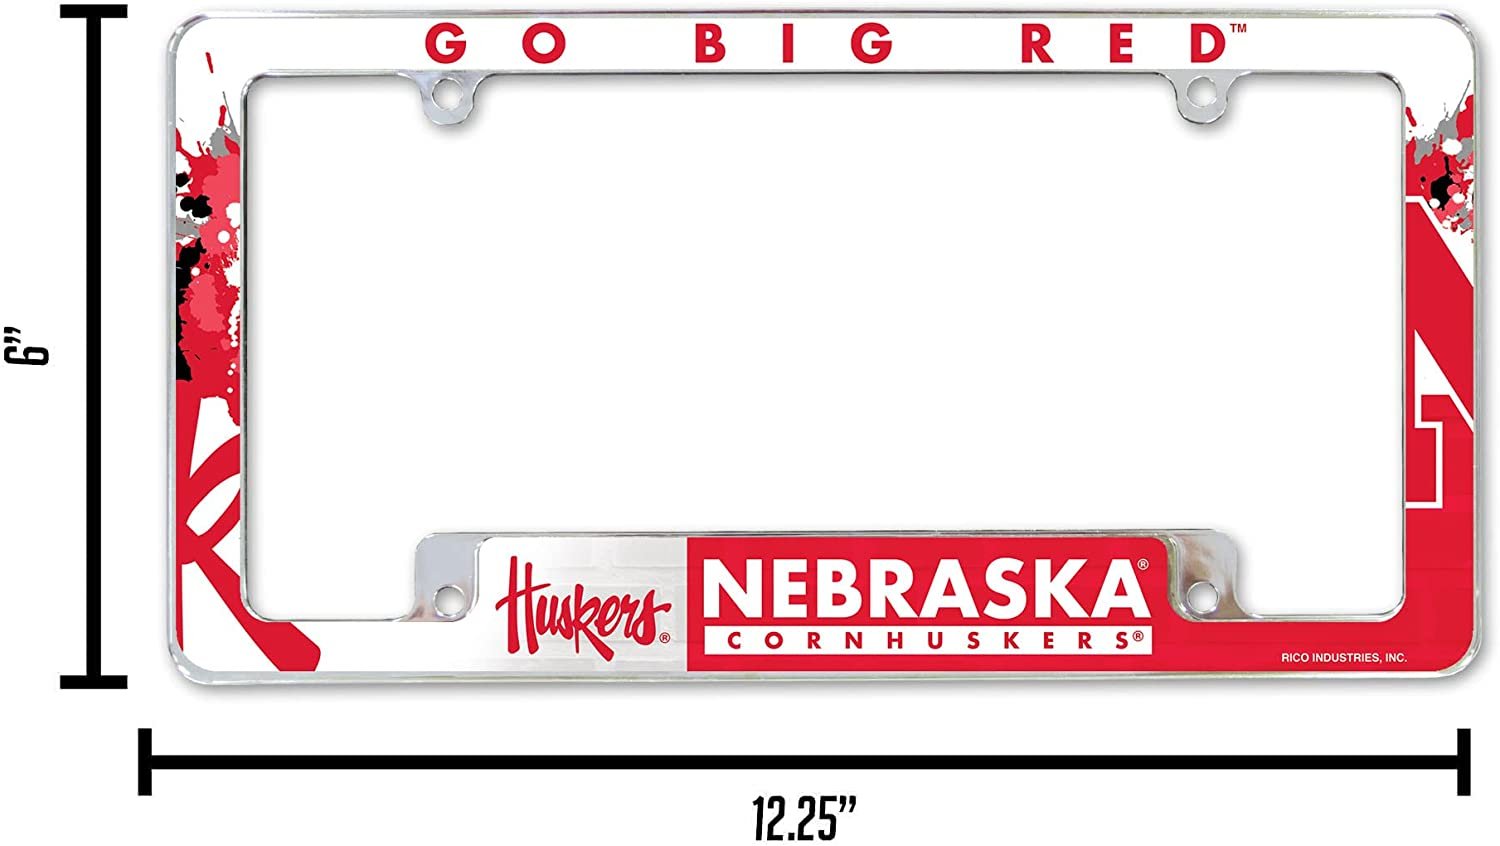 University of Nebraska Cornhuskers Metal License Plate Frame Chrome Tag Cover 12x6 Inch All Over Design